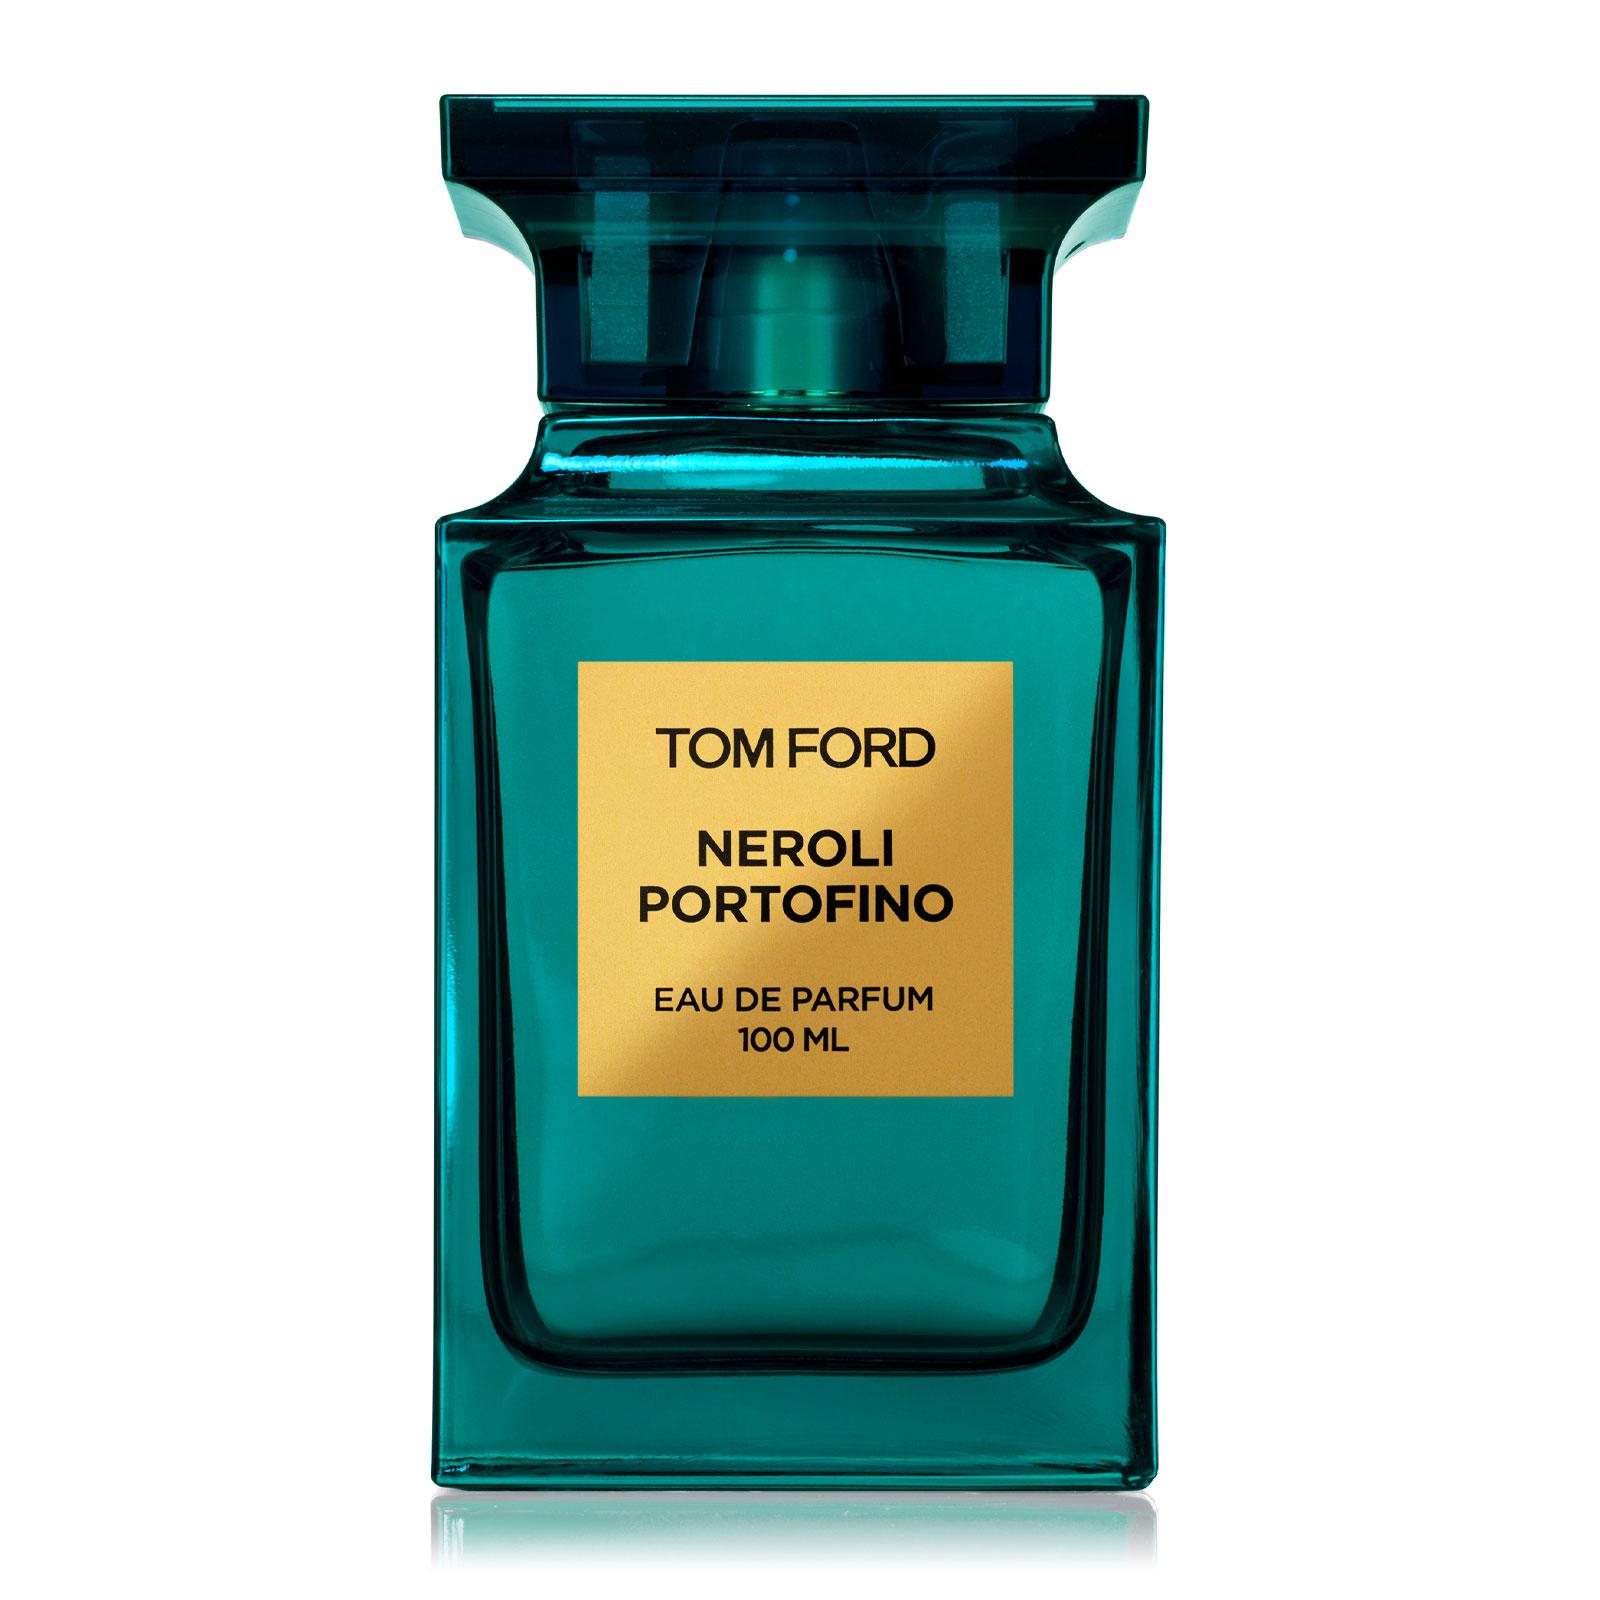 Tom Ford Neroli Portofino Eau de Parfum 100ml | FEELUNIQUE